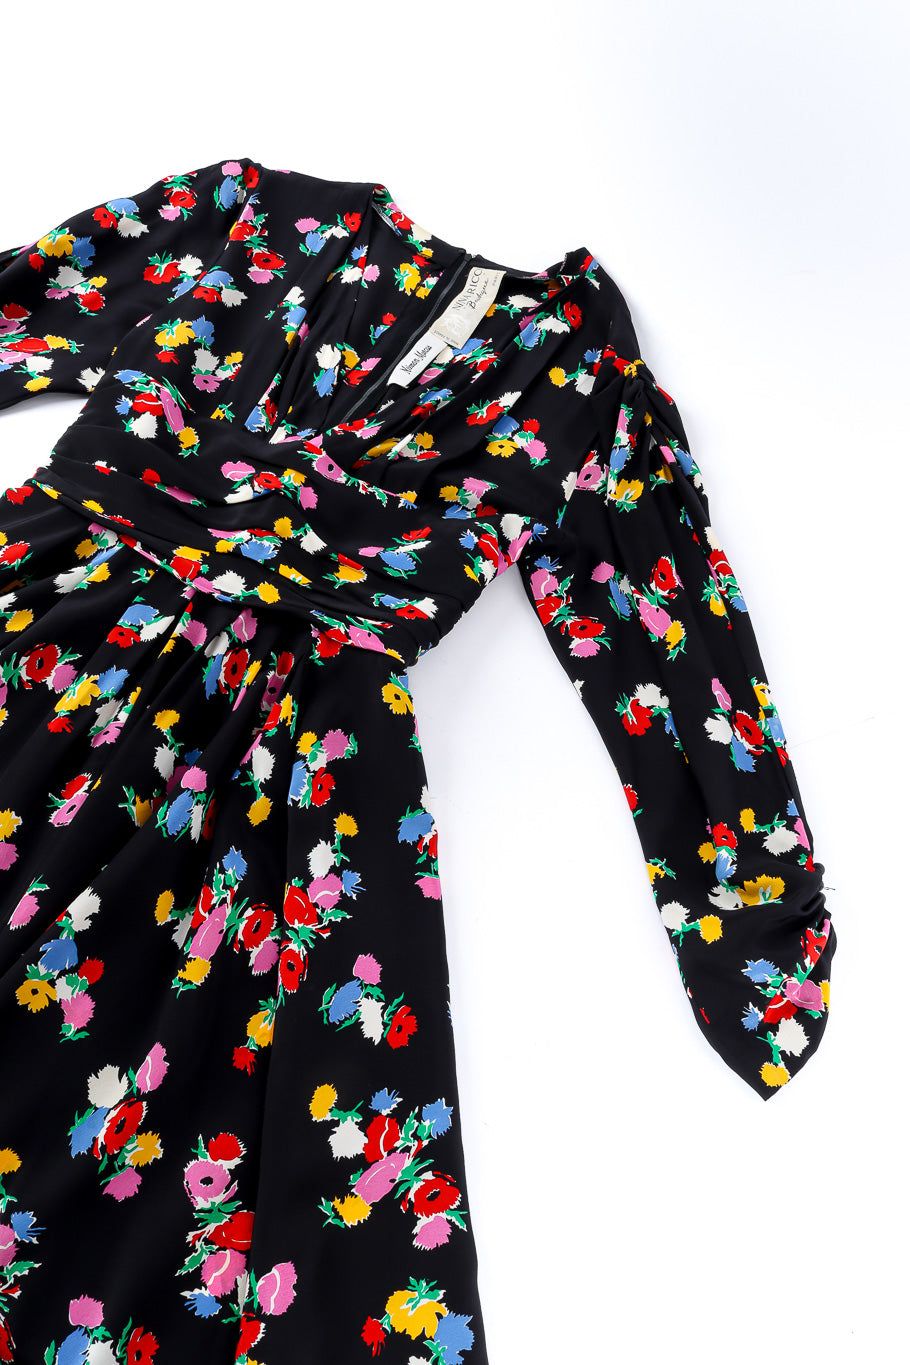 Nina Ricci silk floral print dress flat-lay @recessla